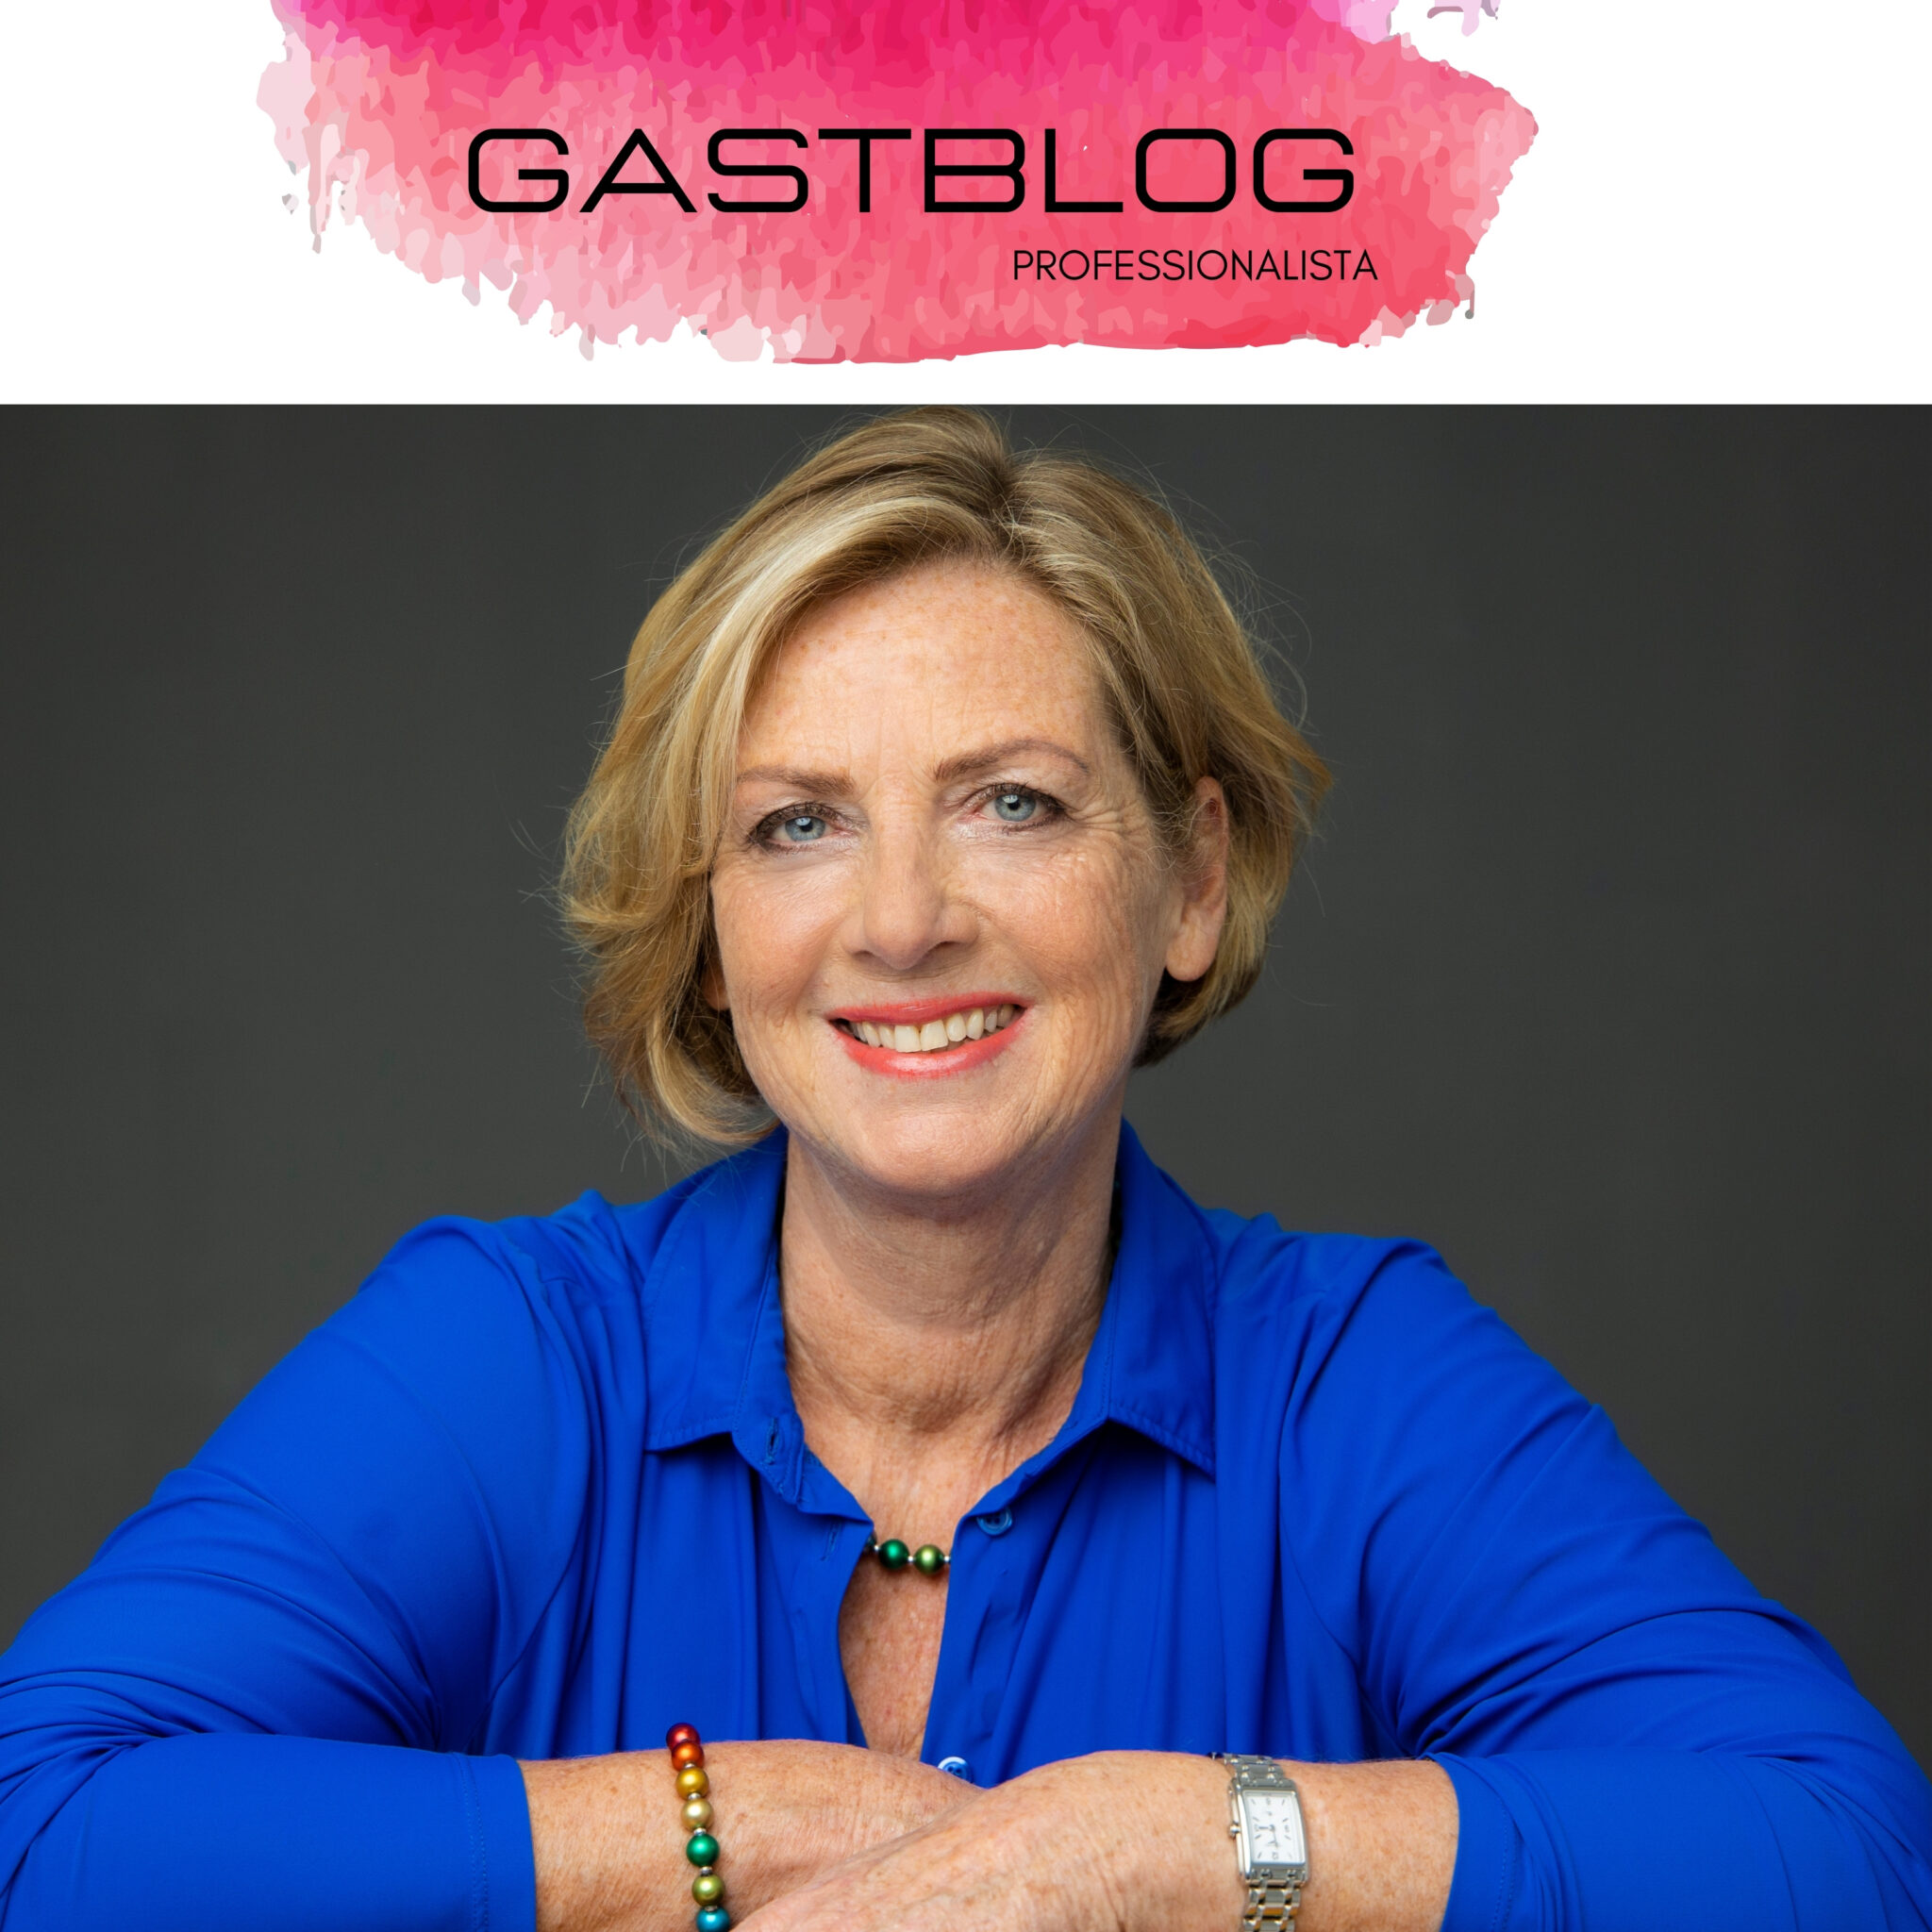 GastBlog Professionalista Marianne van de Water – Make it Special & Onvergetelijk!